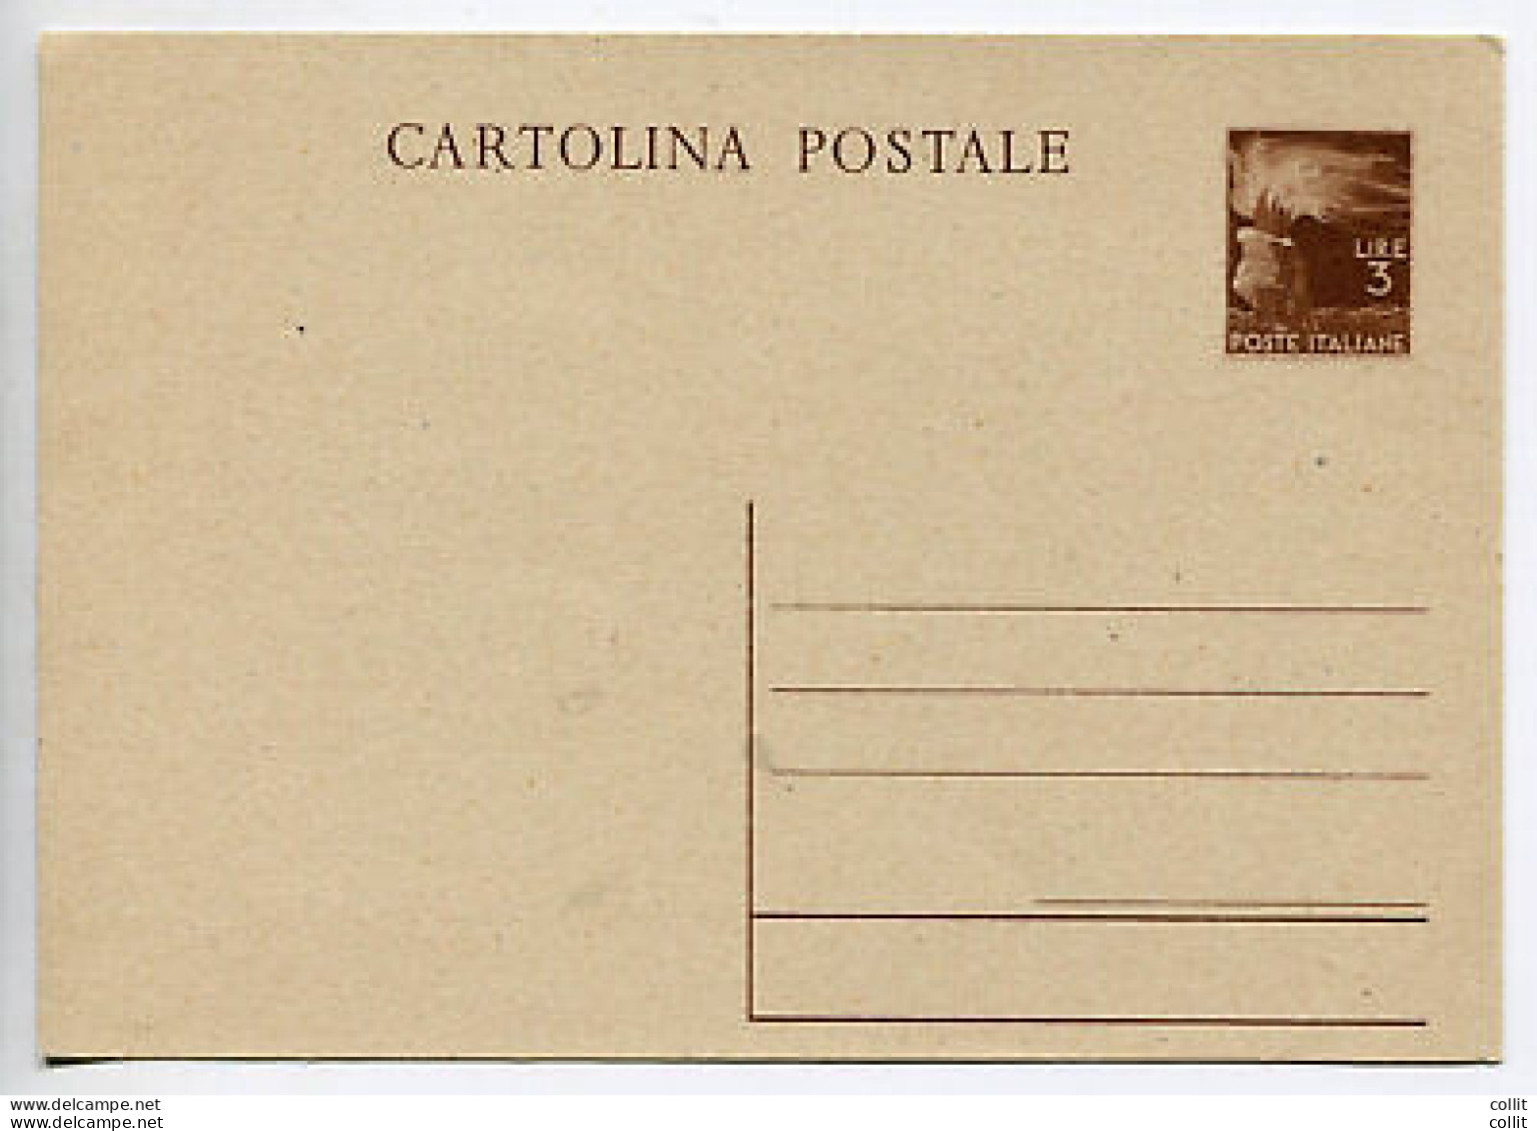 Cartolina Postale L. 3 Democratica - Entiers Postaux